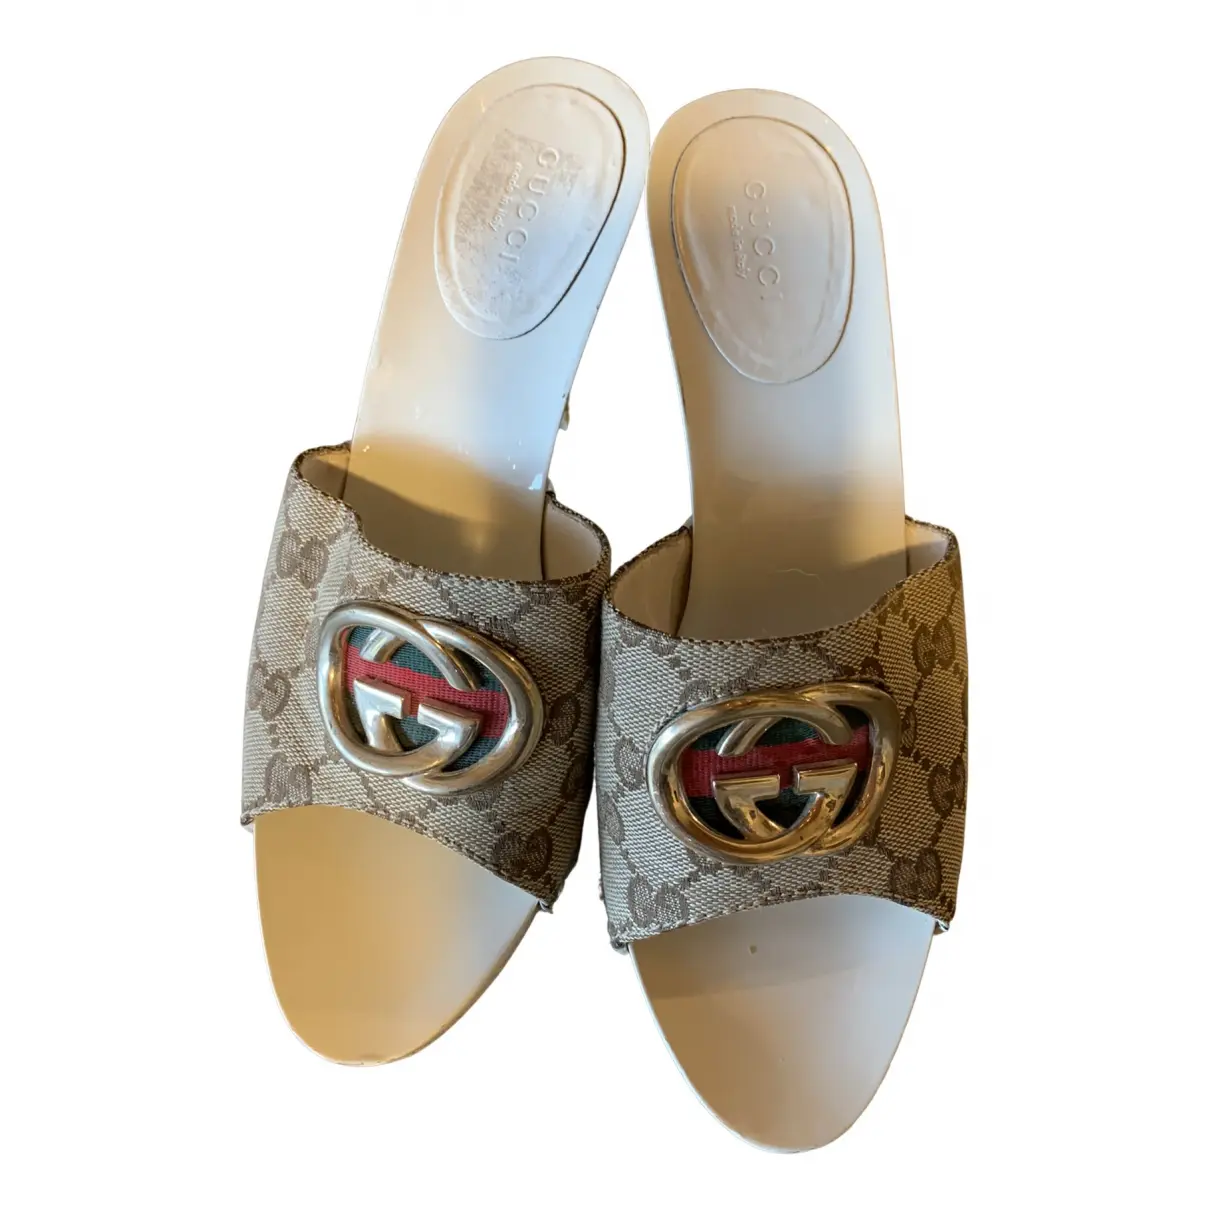 Patent leather sandals Gucci - Vintage